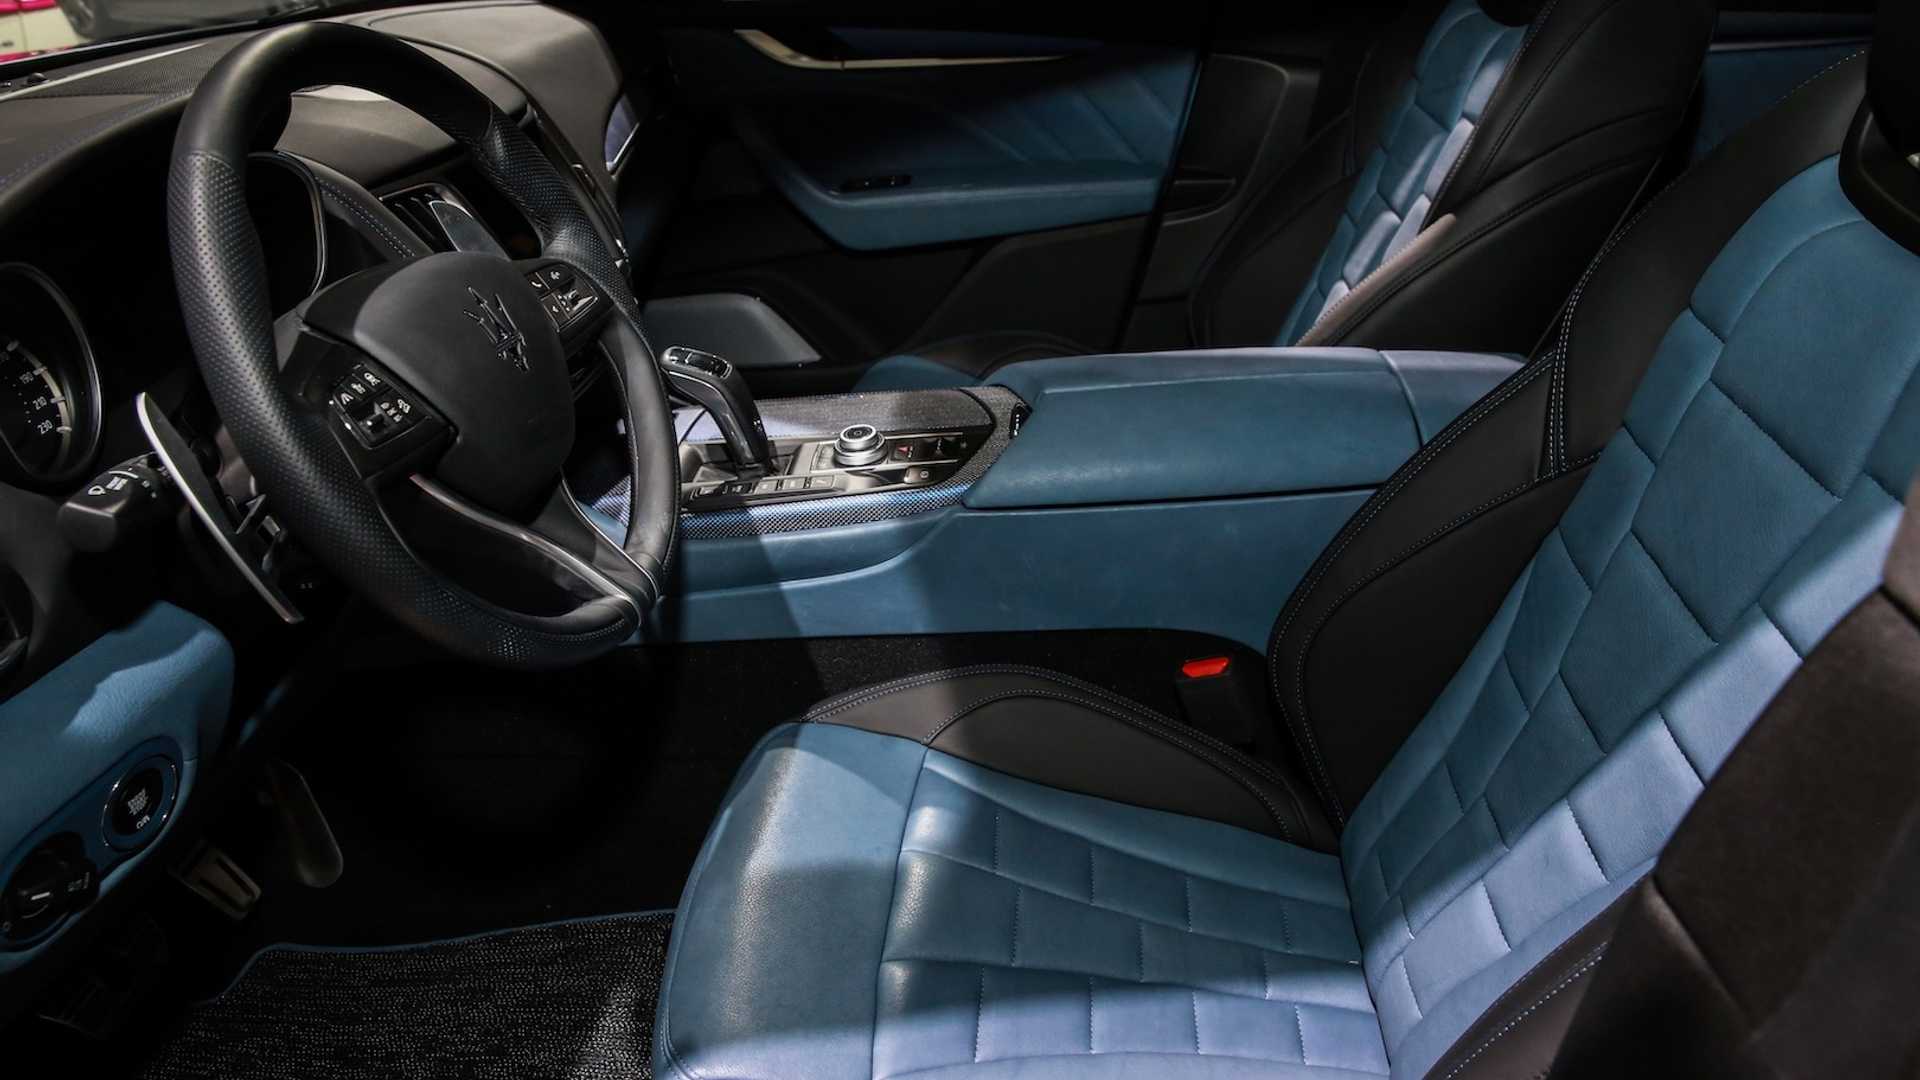 Звезда NBA Рэй Аллен купил эксклюзивный Maserati Levante